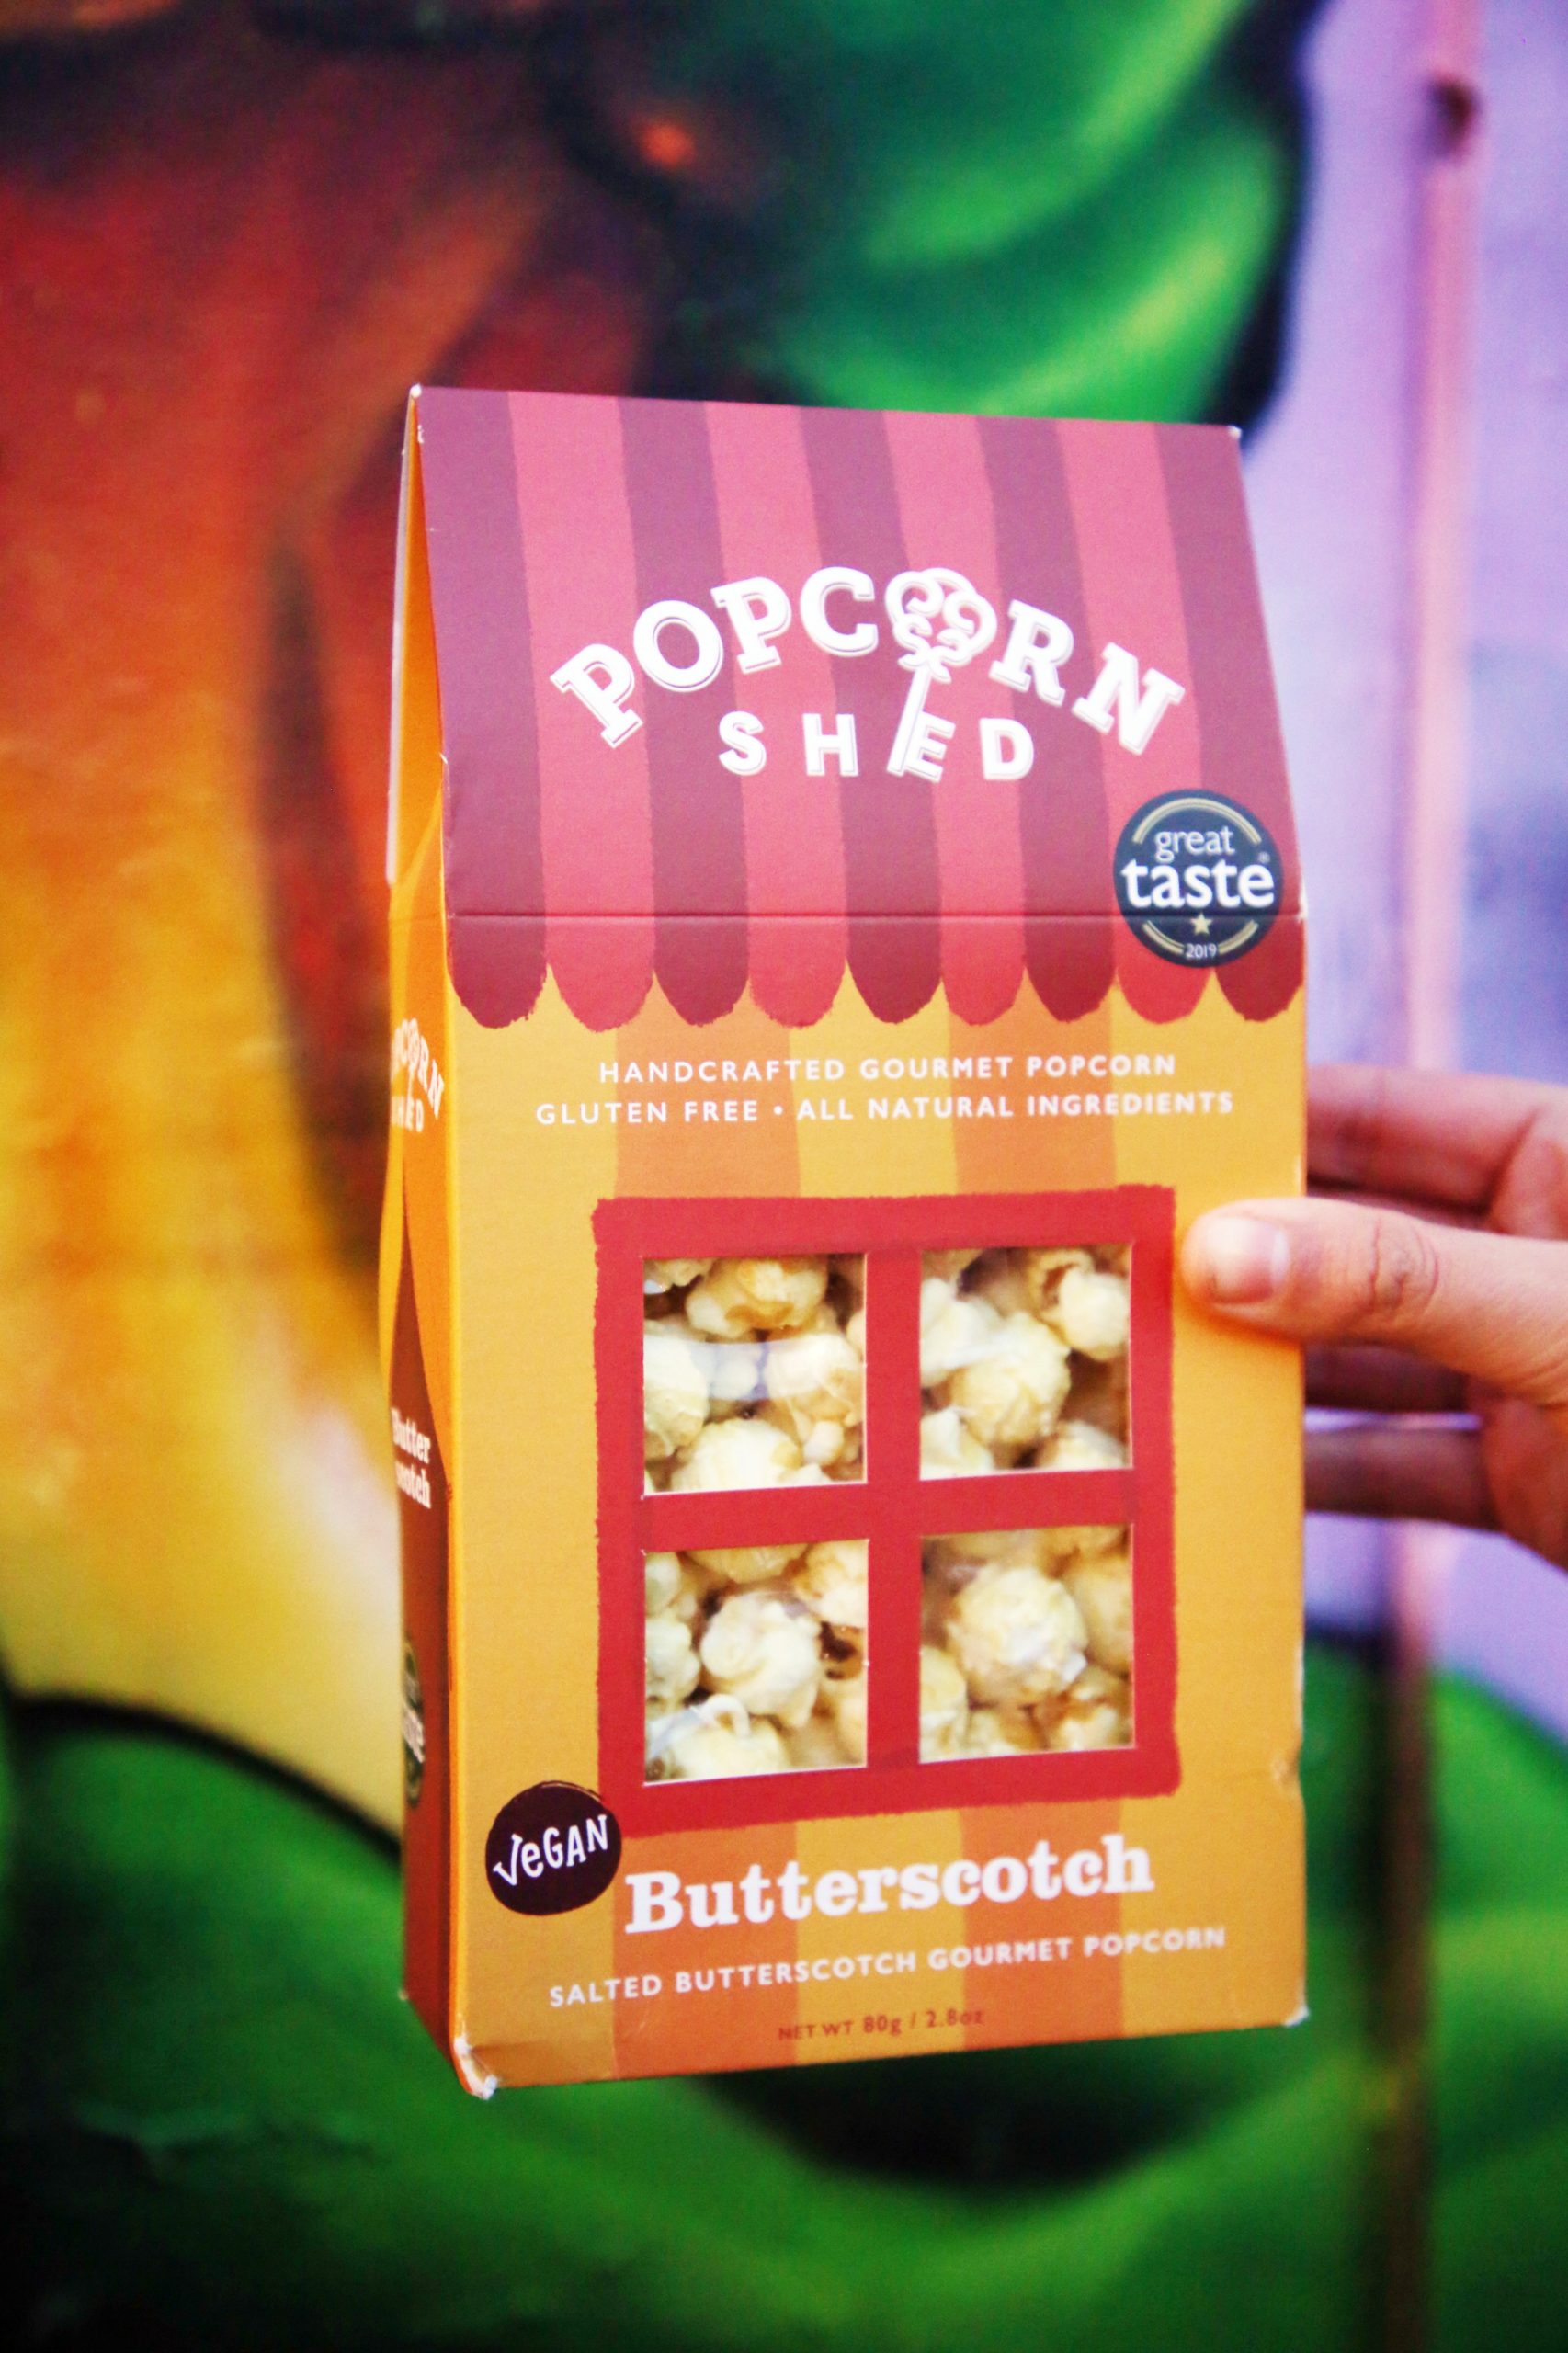 <img src="popcorn.jpg" alt="popcorn shed colourful christmas gift"/> 